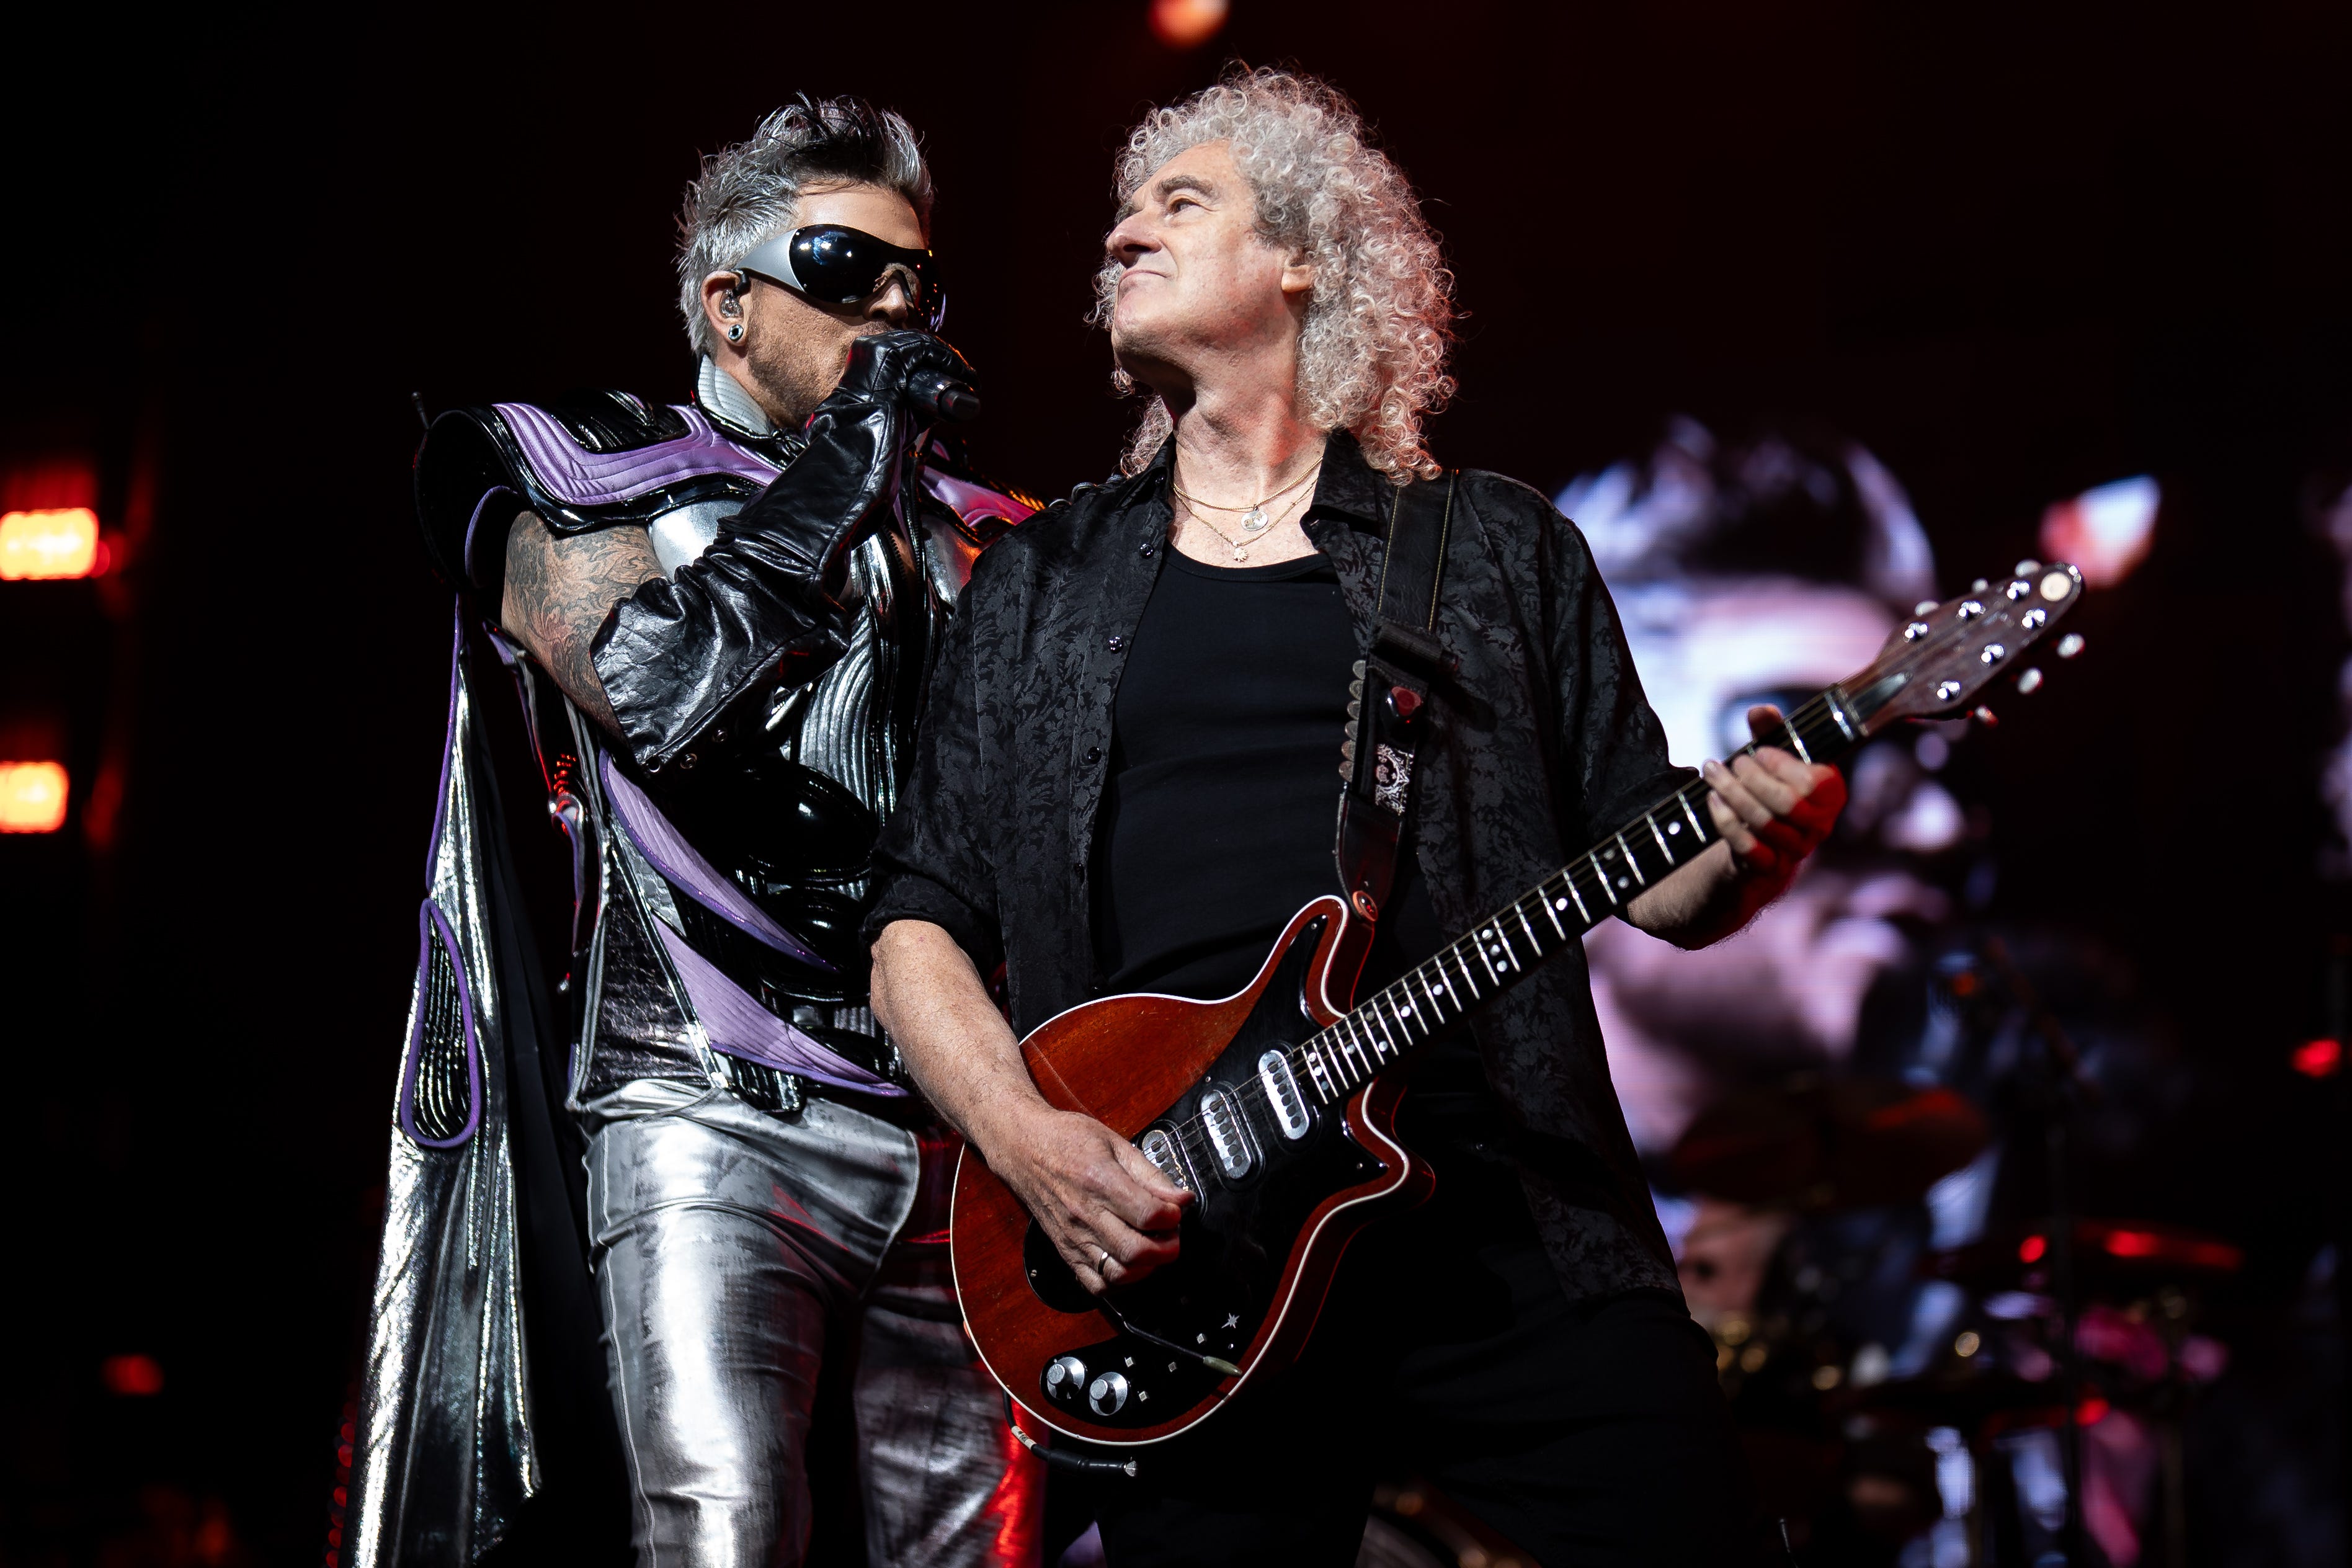 Queen and Adam Lambert bring Rhapsody Tour to Nashville's Bridgestone Arena. Here are the highlights.